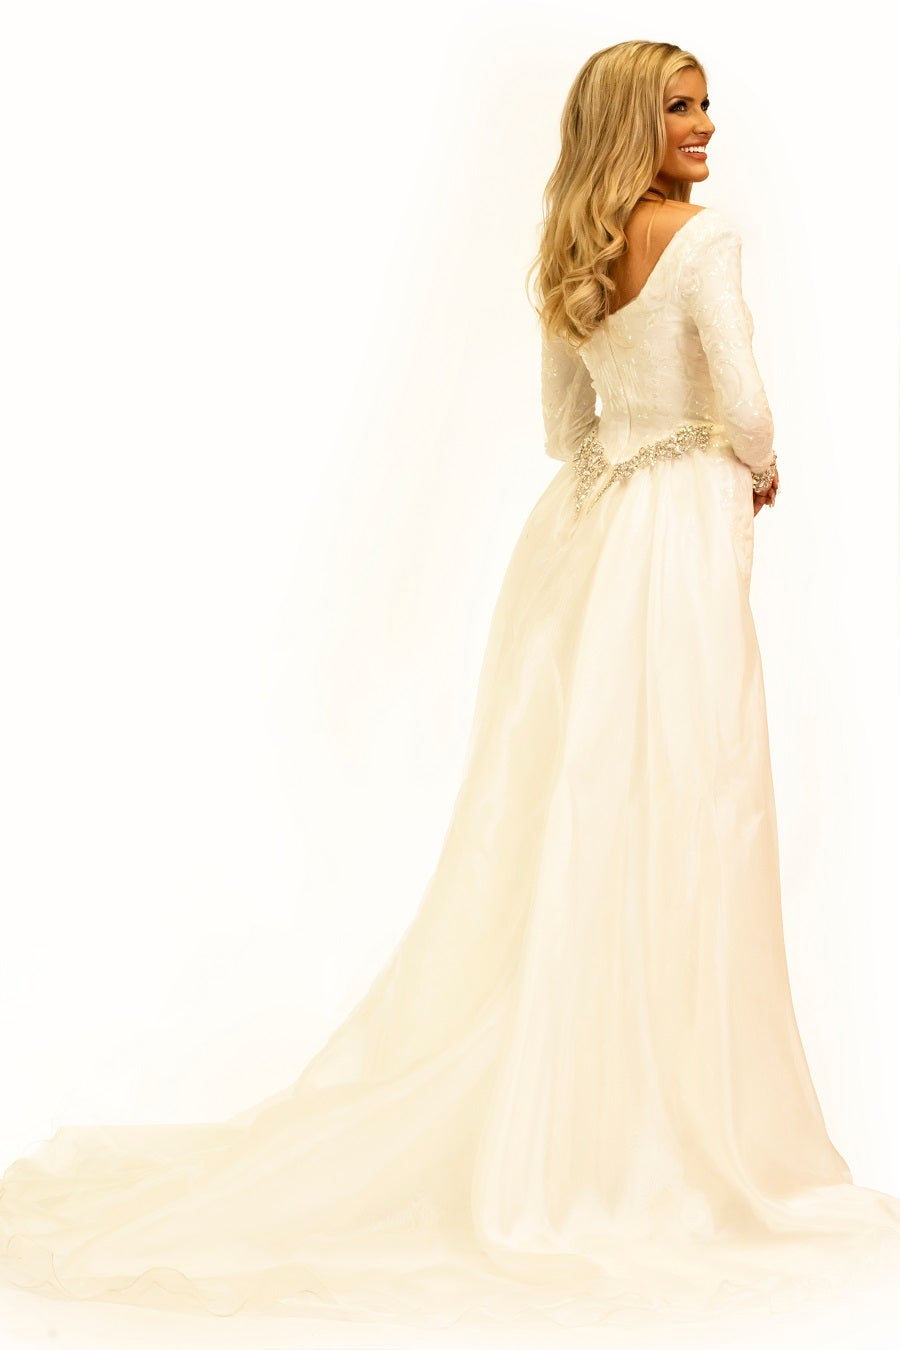 Johnathan-Kayne-2334-ivory-pageant-dress-back-long-sleeves-embellished-overskirt.